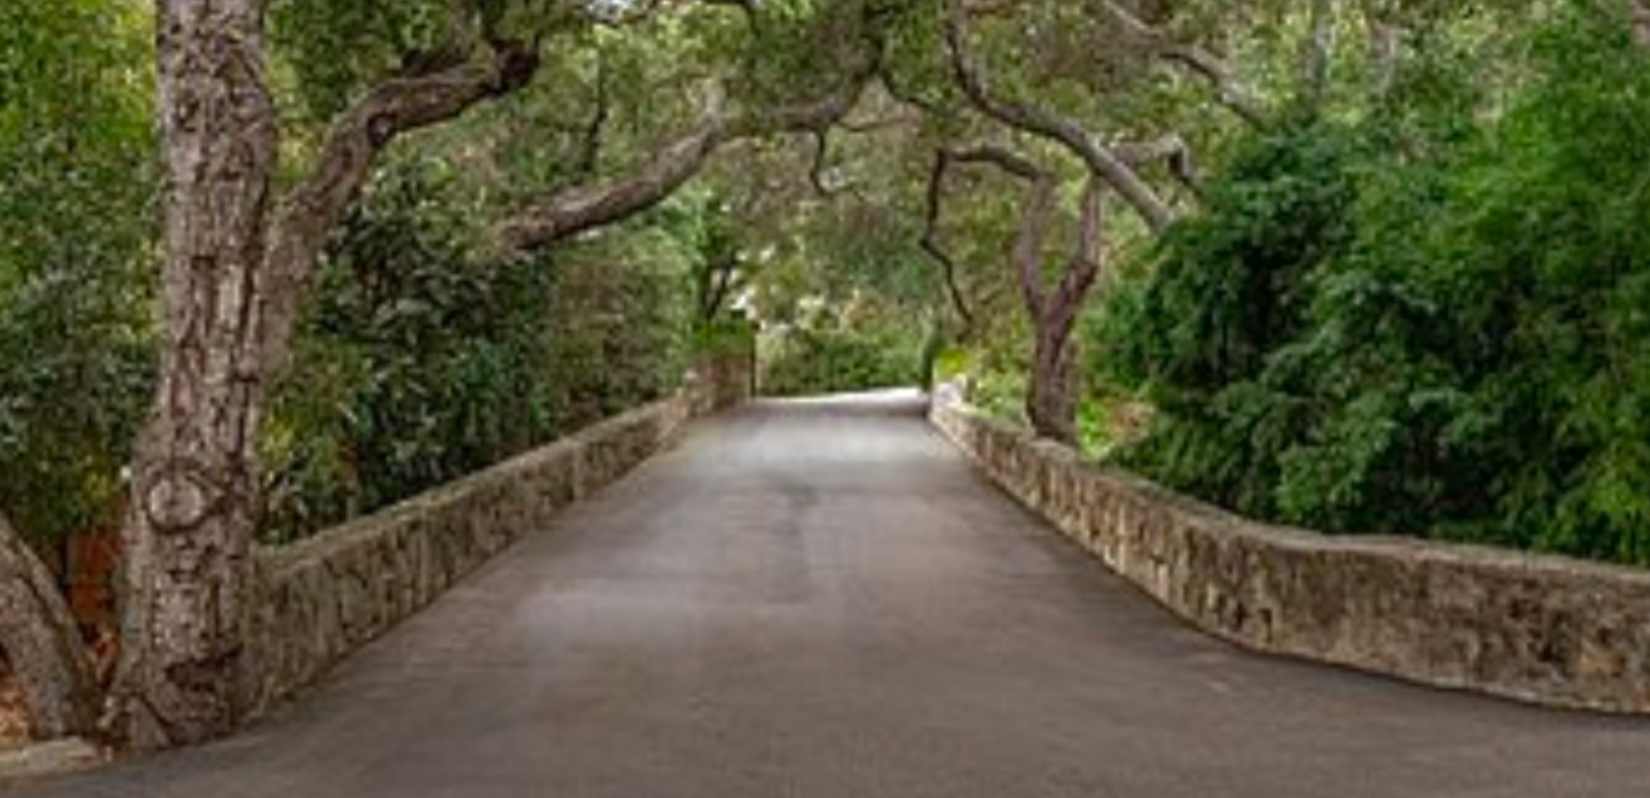 Joyce DeWitt's home driveway in Santa Barbara, California | Source: YouTube/DrGariS